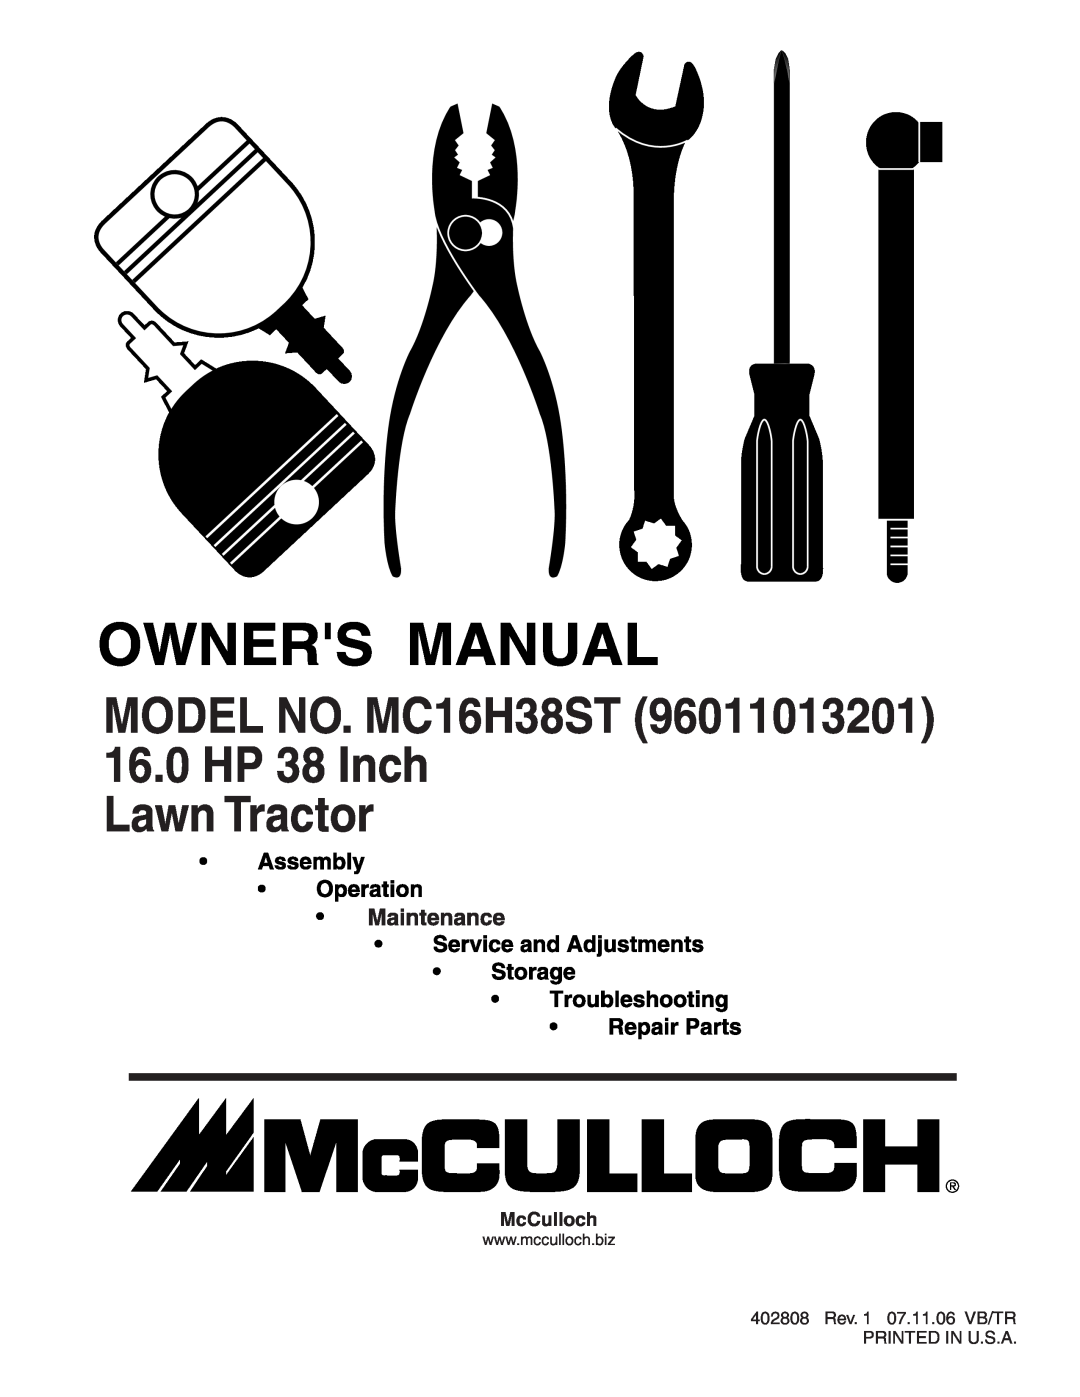 McCulloch 96011013201 manual MODEL NO. MC16H38ST 16.0 HP 38 Inch Lawn Tractor, McCulloch 